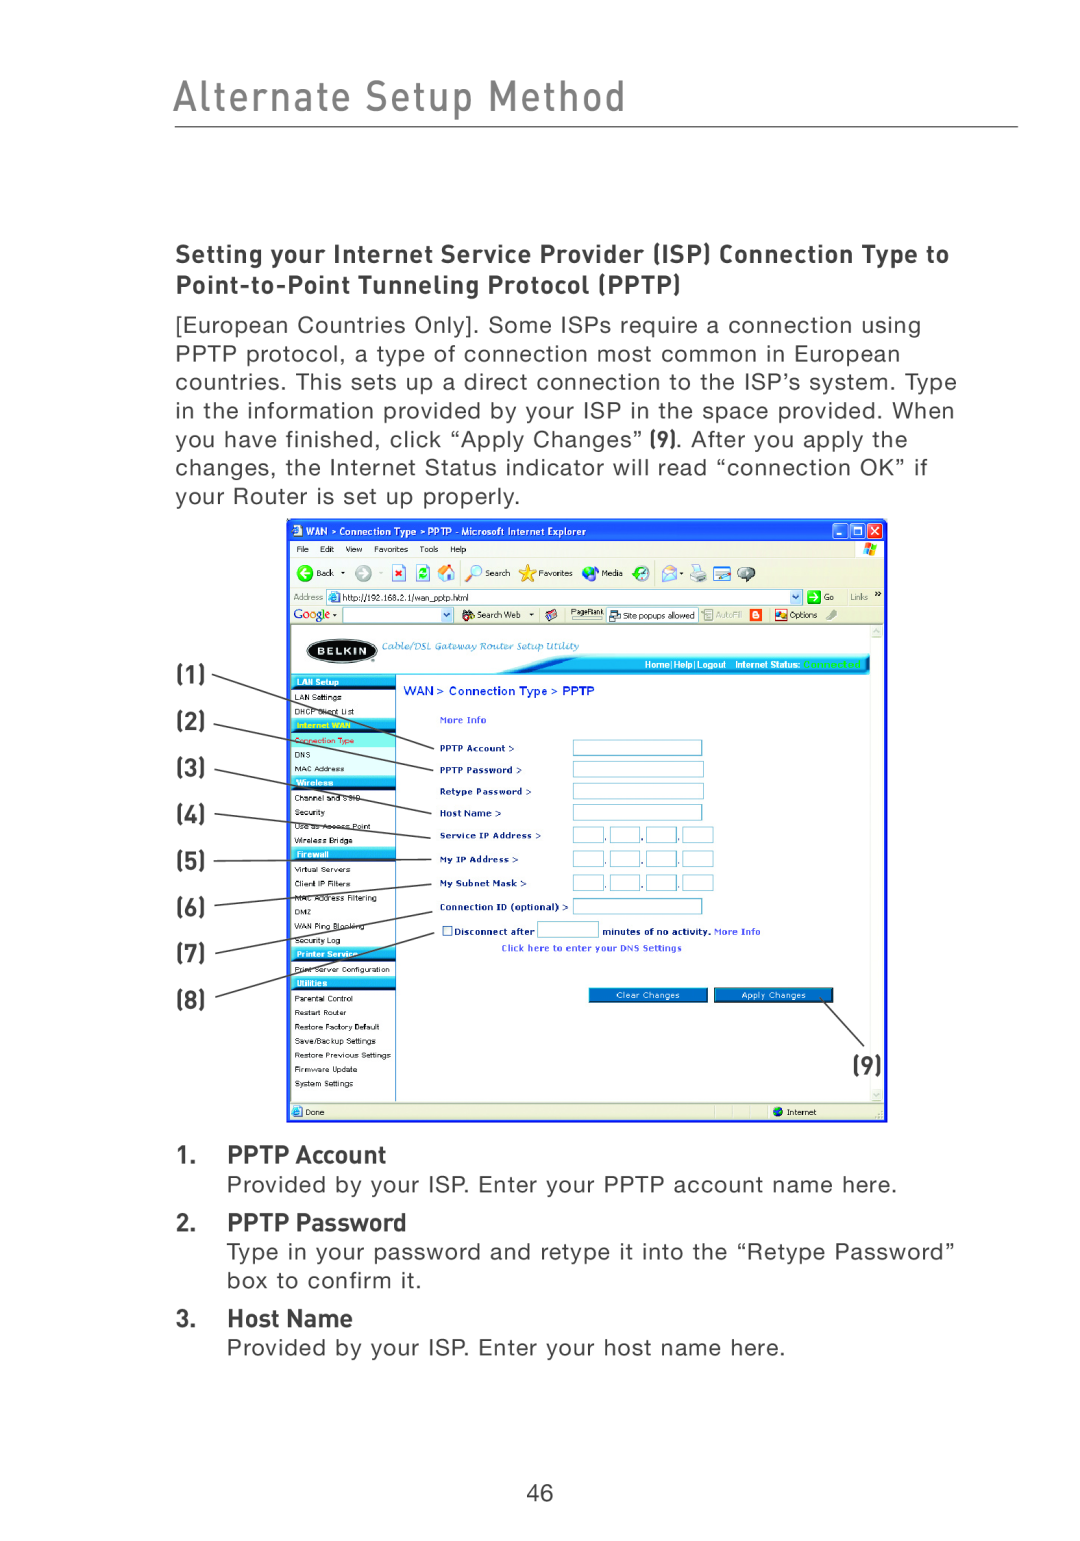 Belkin F5D7231-4P user manual PPTP Account, PPTP Password, Host Name, Alternate Setup Method 